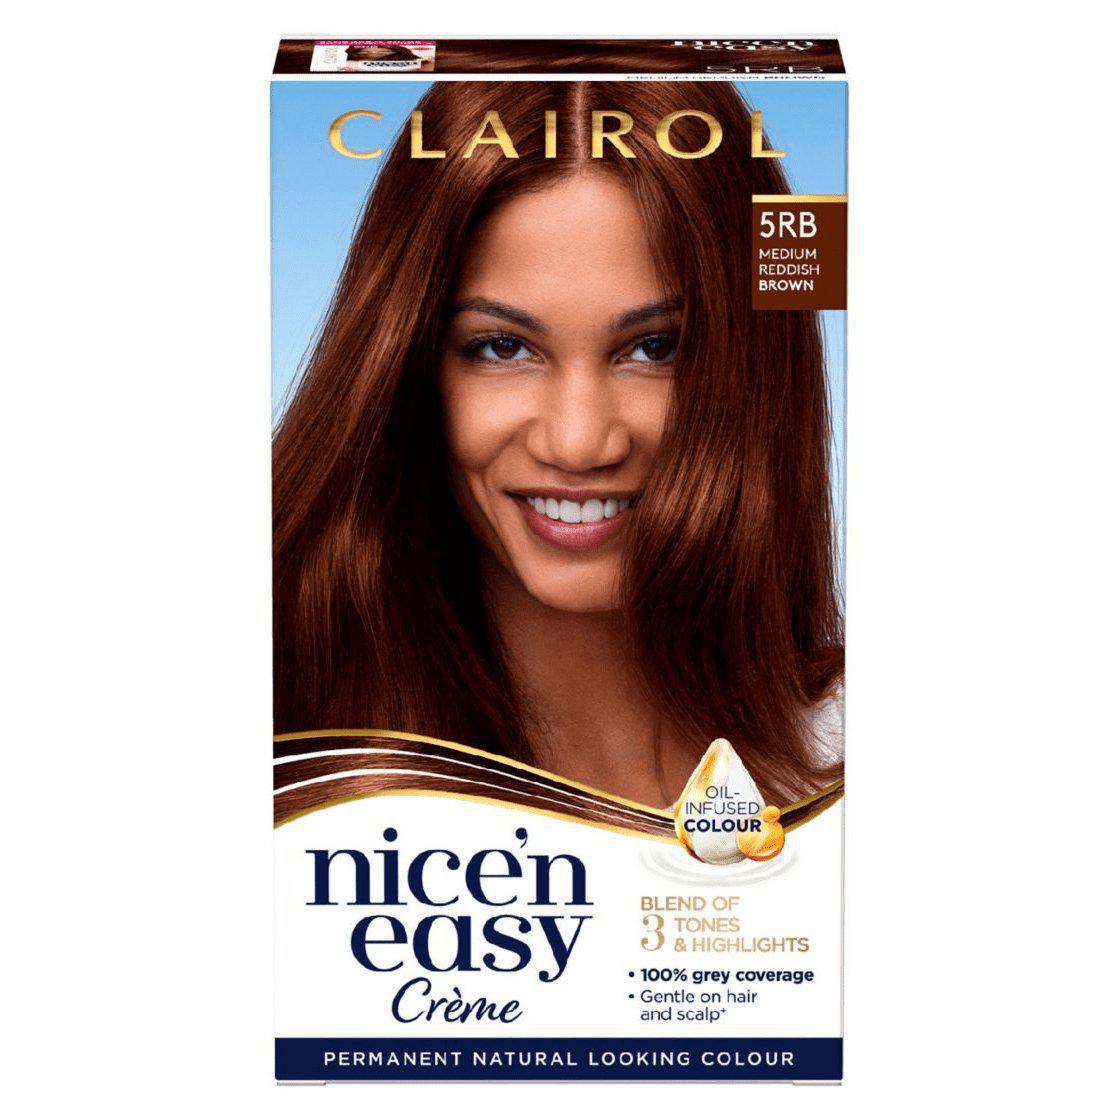 Clairol Nice N Easy Crème Natural Permanent Hair Dye - 5RB Medium Reddish Brown - Healthxpress.ie